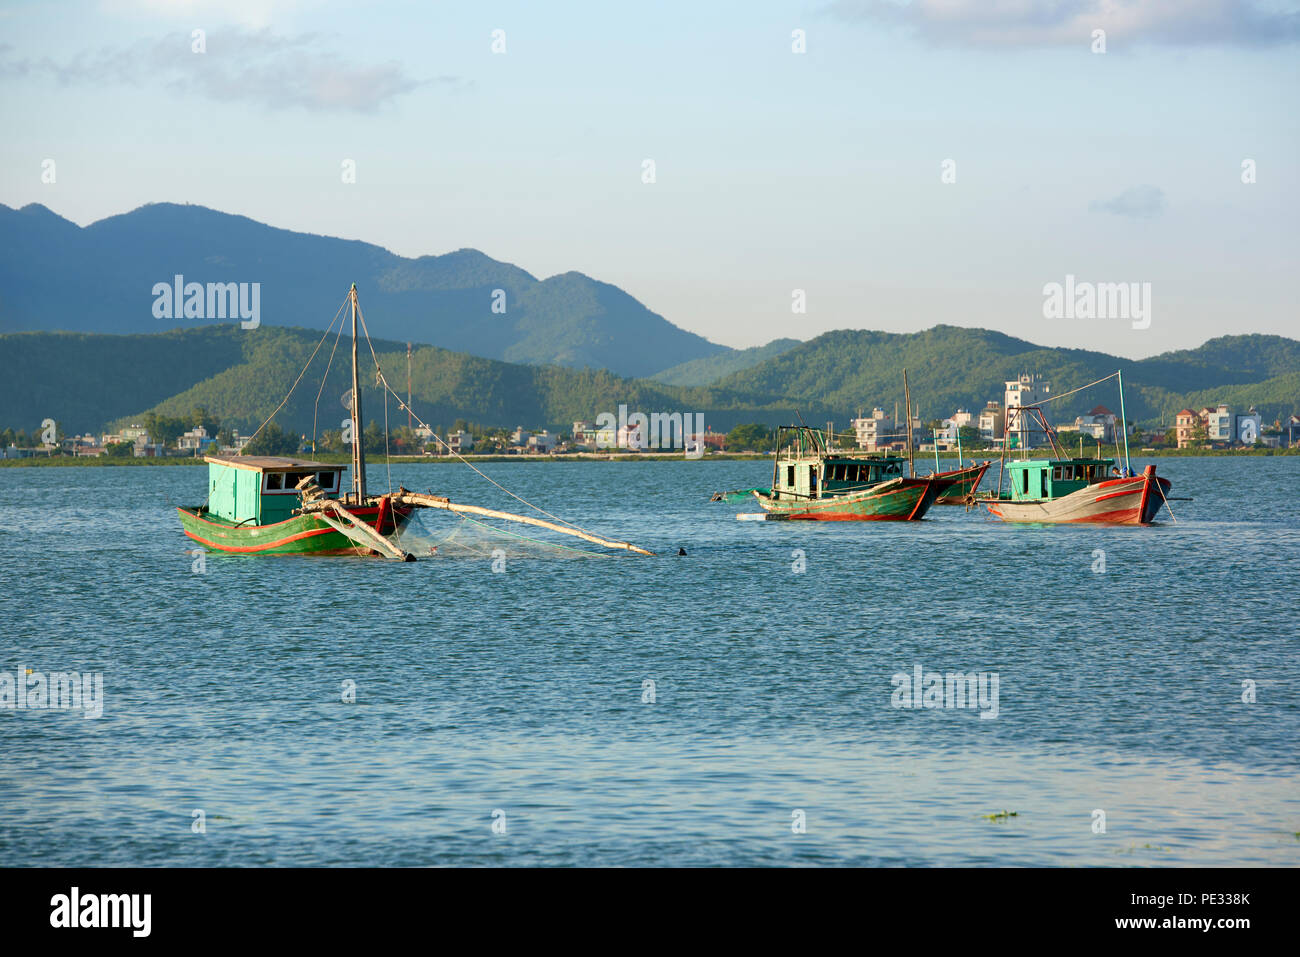 Three small fishing boats being lit by warm sunlight in Bai Tu Long Bay, North Vietnam. Stock Photo